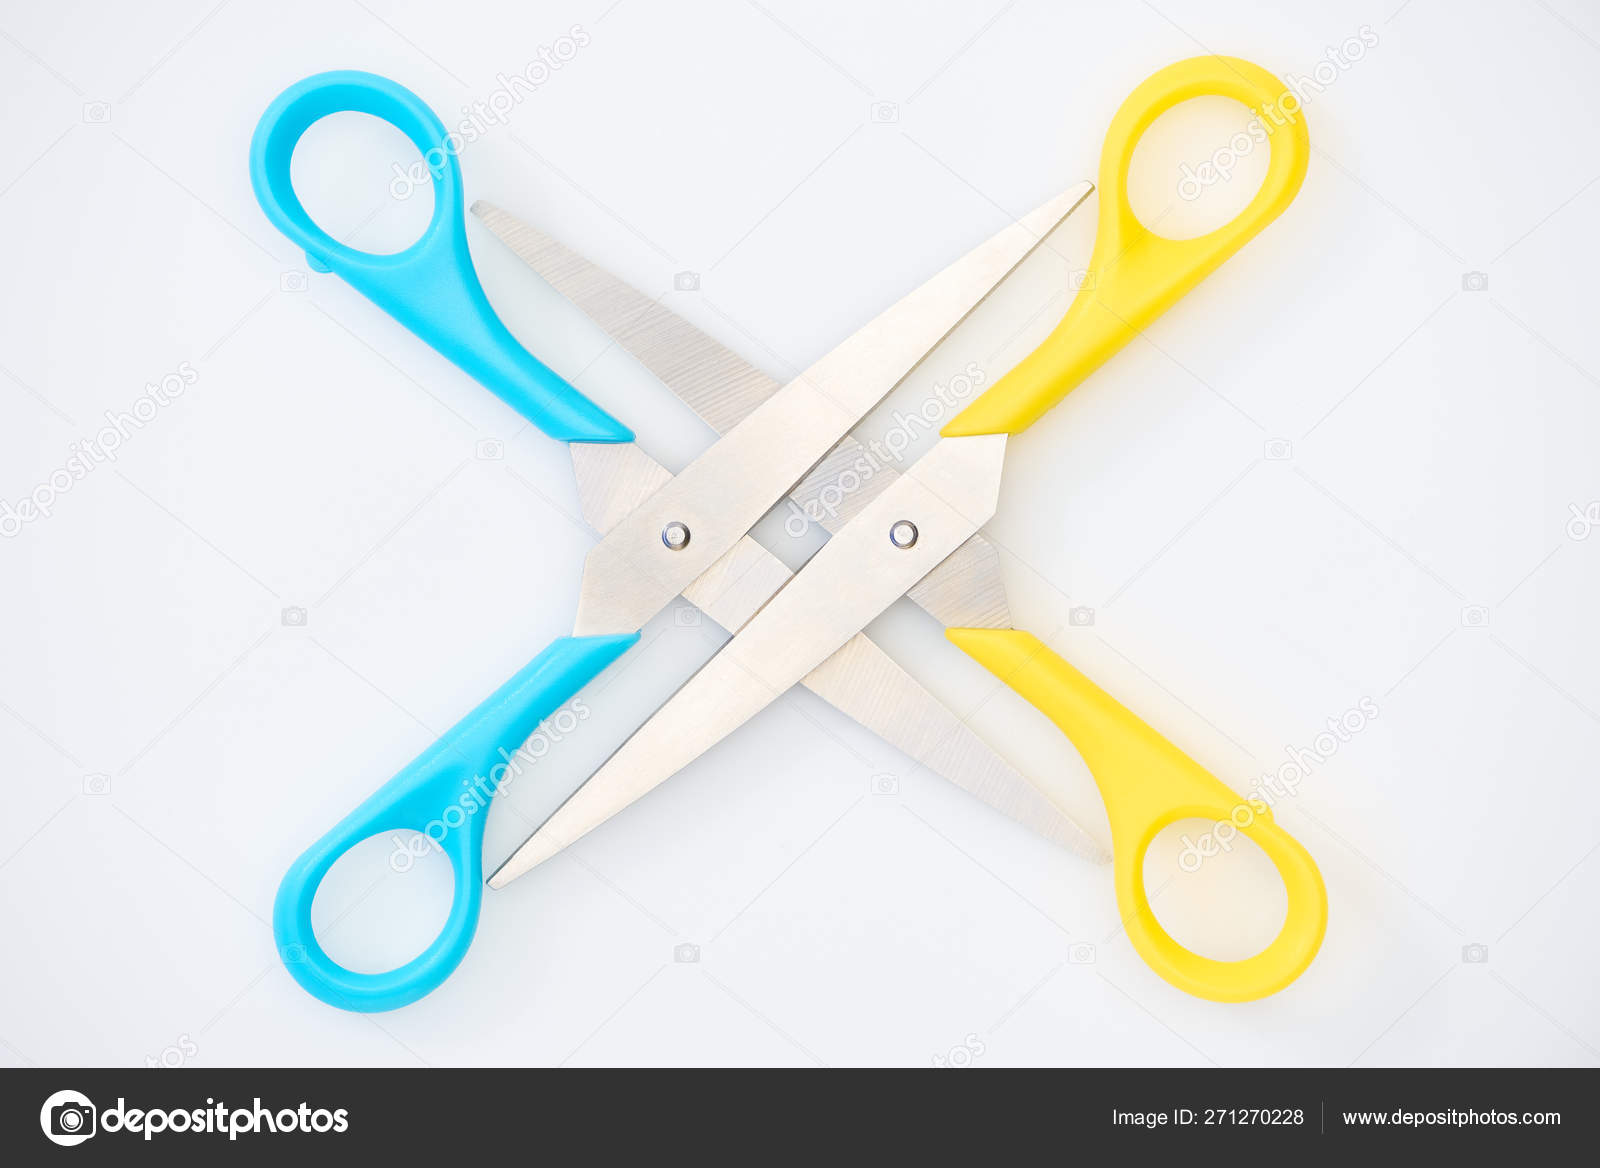 https://st4.depositphotos.com/13324256/27127/i/1600/depositphotos_271270228-stock-photo-top-view-yellow-blue-scissors.jpg